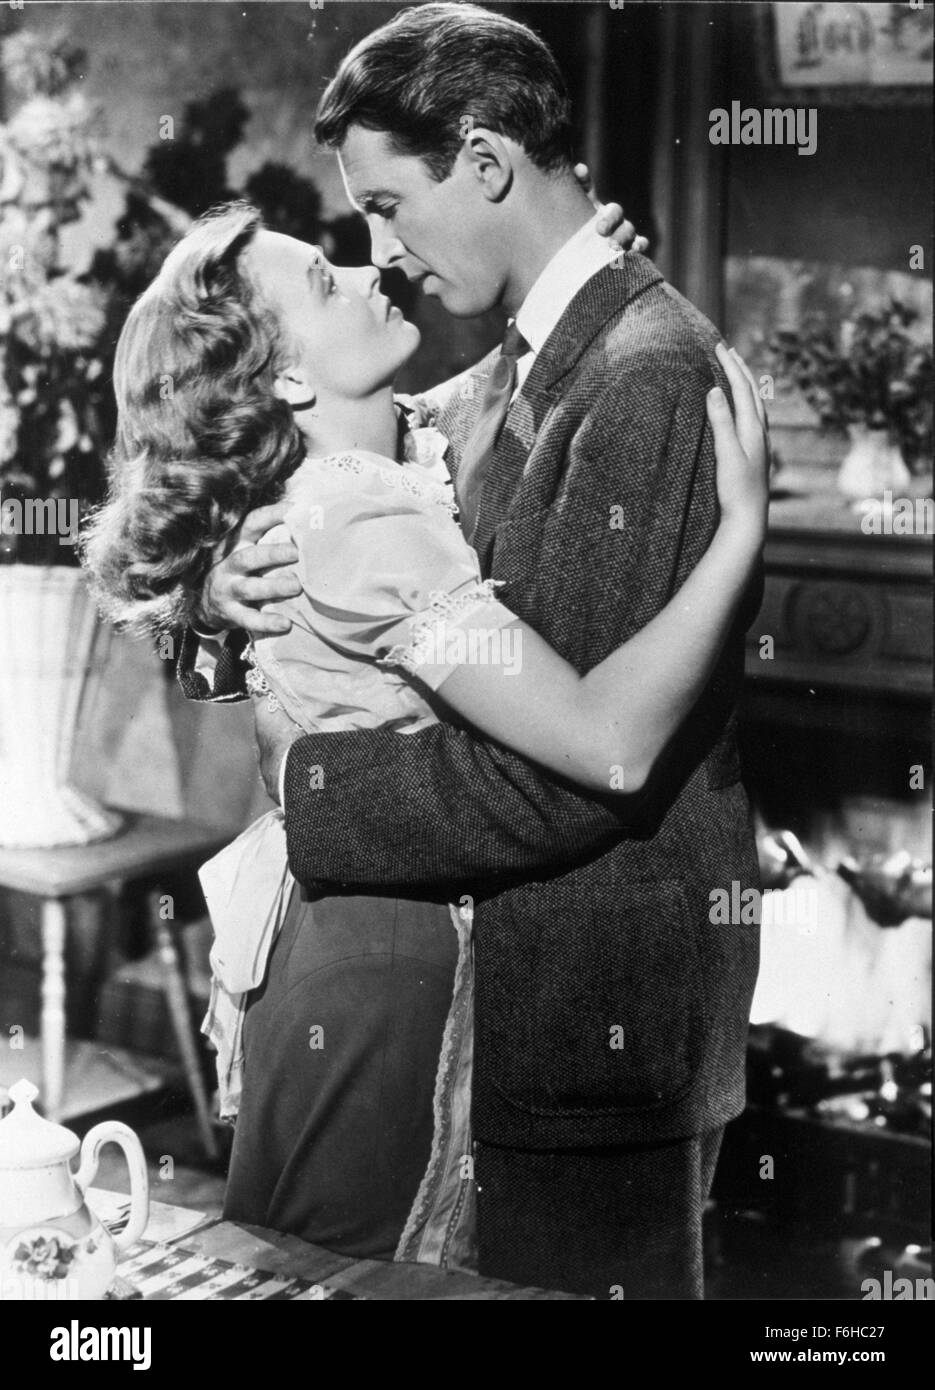 1946, Filmtitel: Es ist ein wundervolles Leben, Regie: FRANK CAPRA, Studio: RKO, im Bild: FRANK CAPRA, DONNA REED. (Bild Kredit: SNAP) Stockfoto